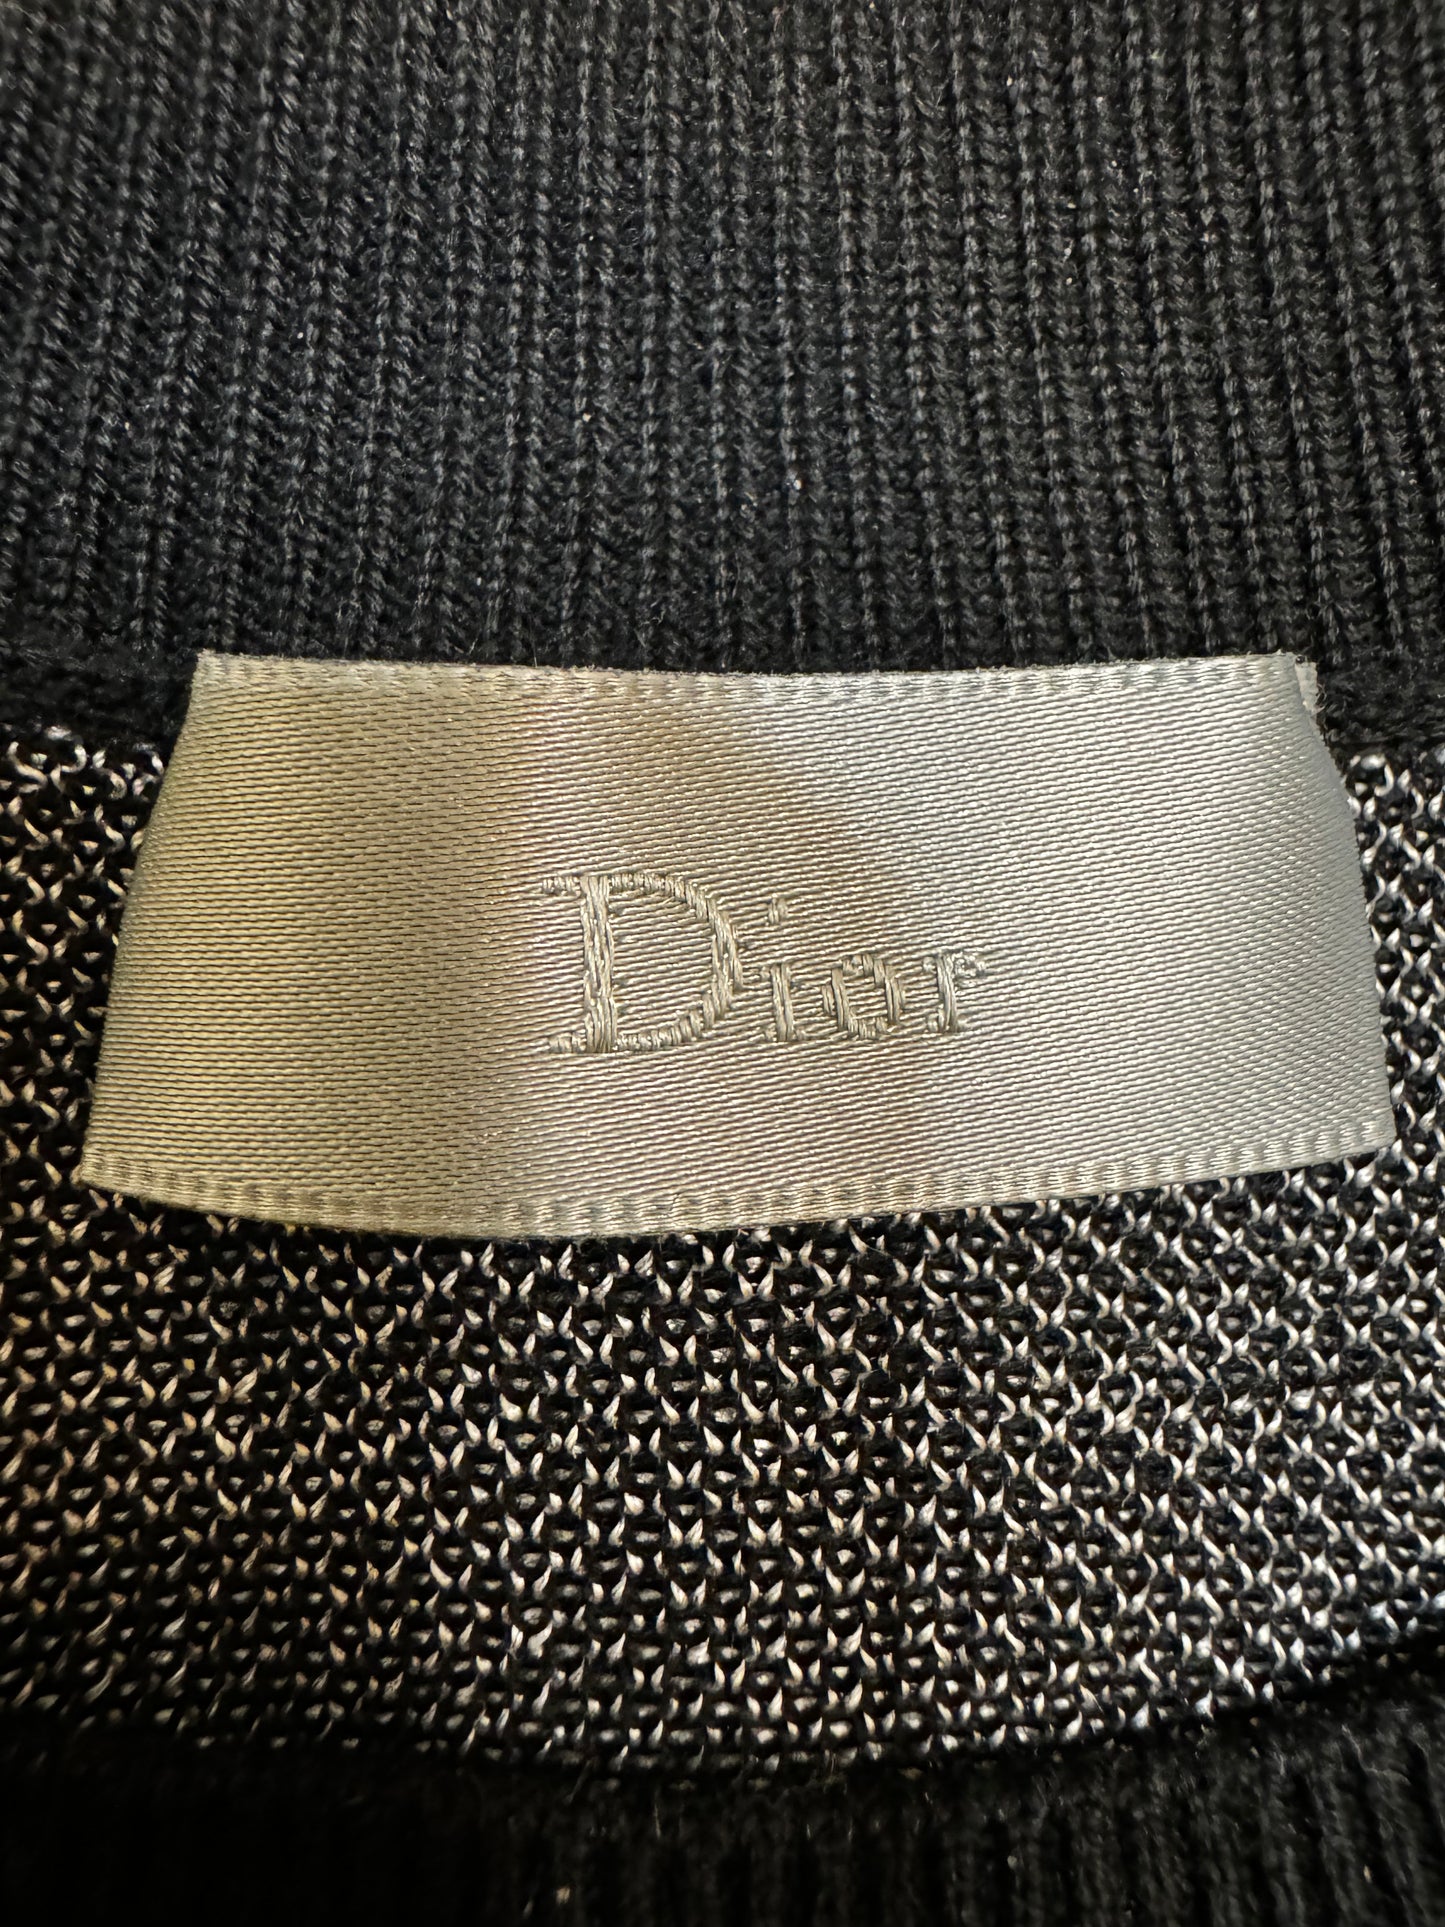 Dior Dan FW17 Witz Mosh Pit Sweater